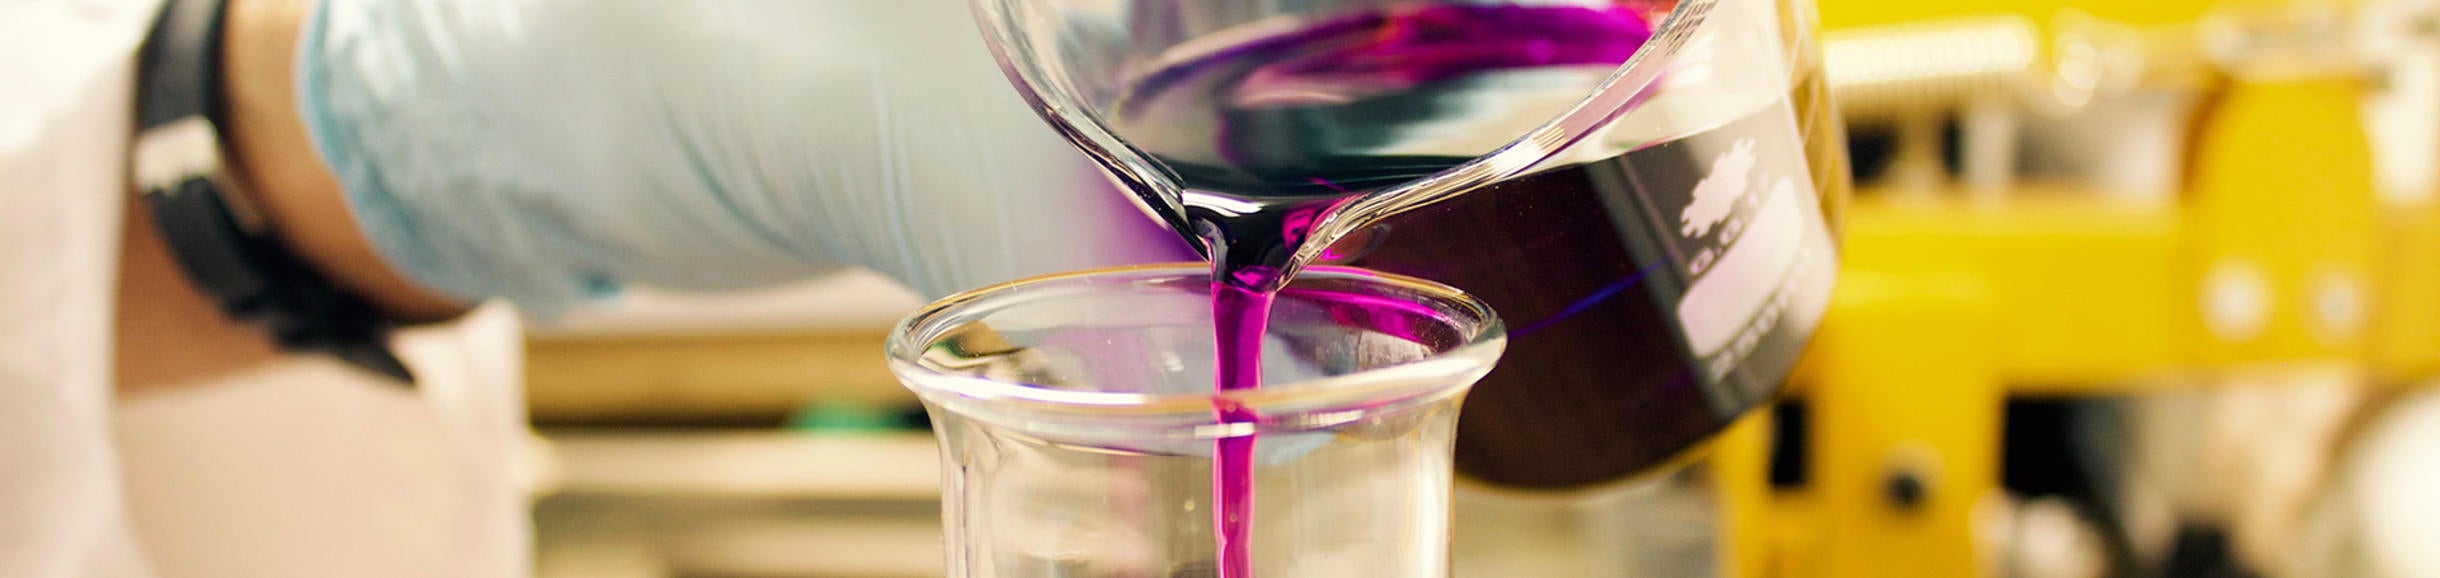 purple liquid being poured (c) Louis Reed unsplash